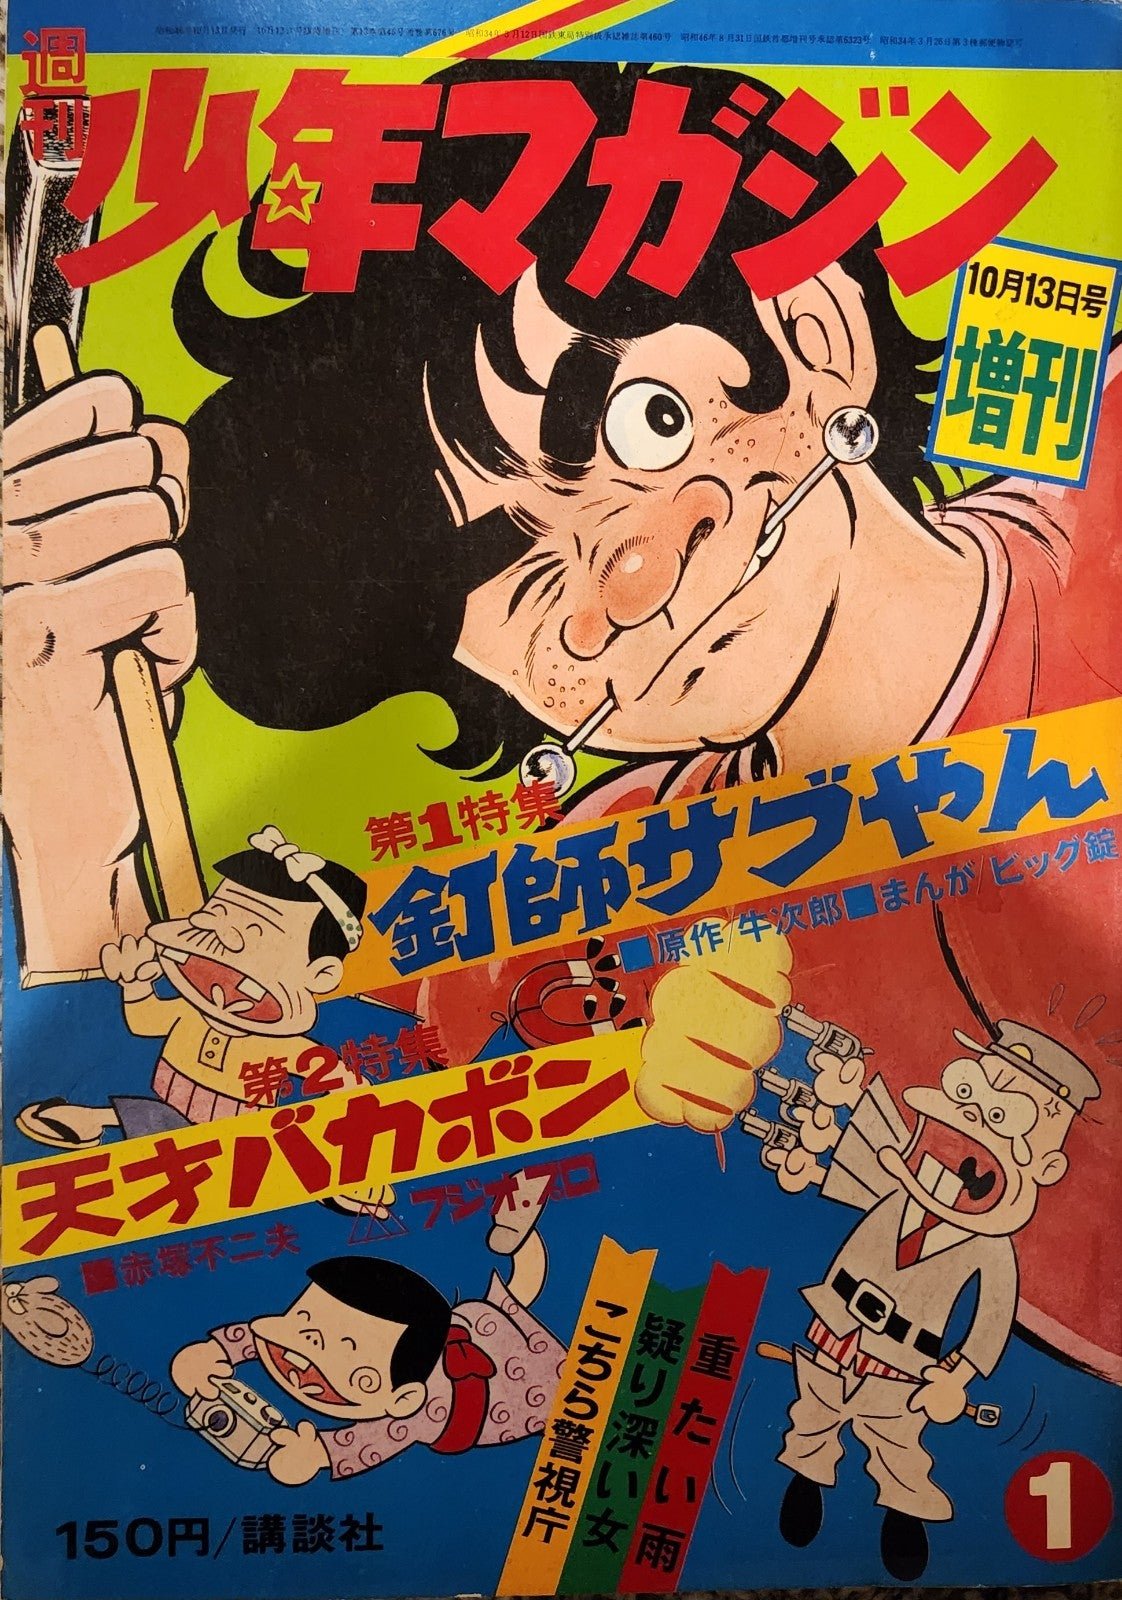 Weekly Shonen Magazine Extra Issue 1971 #1 FqS2TaukI